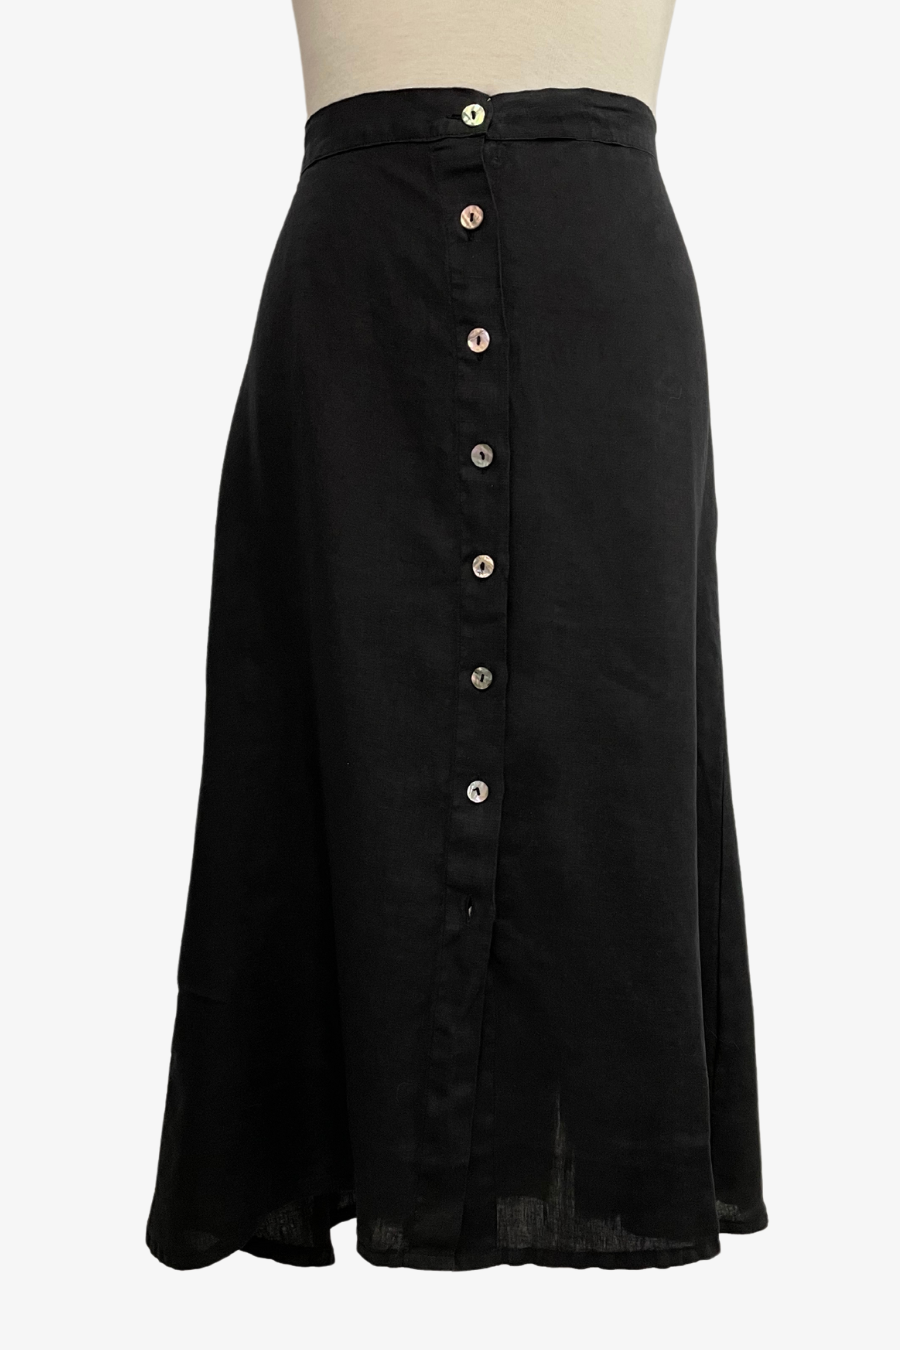 Cinzia High-Low Hem Skirt in Black Linen